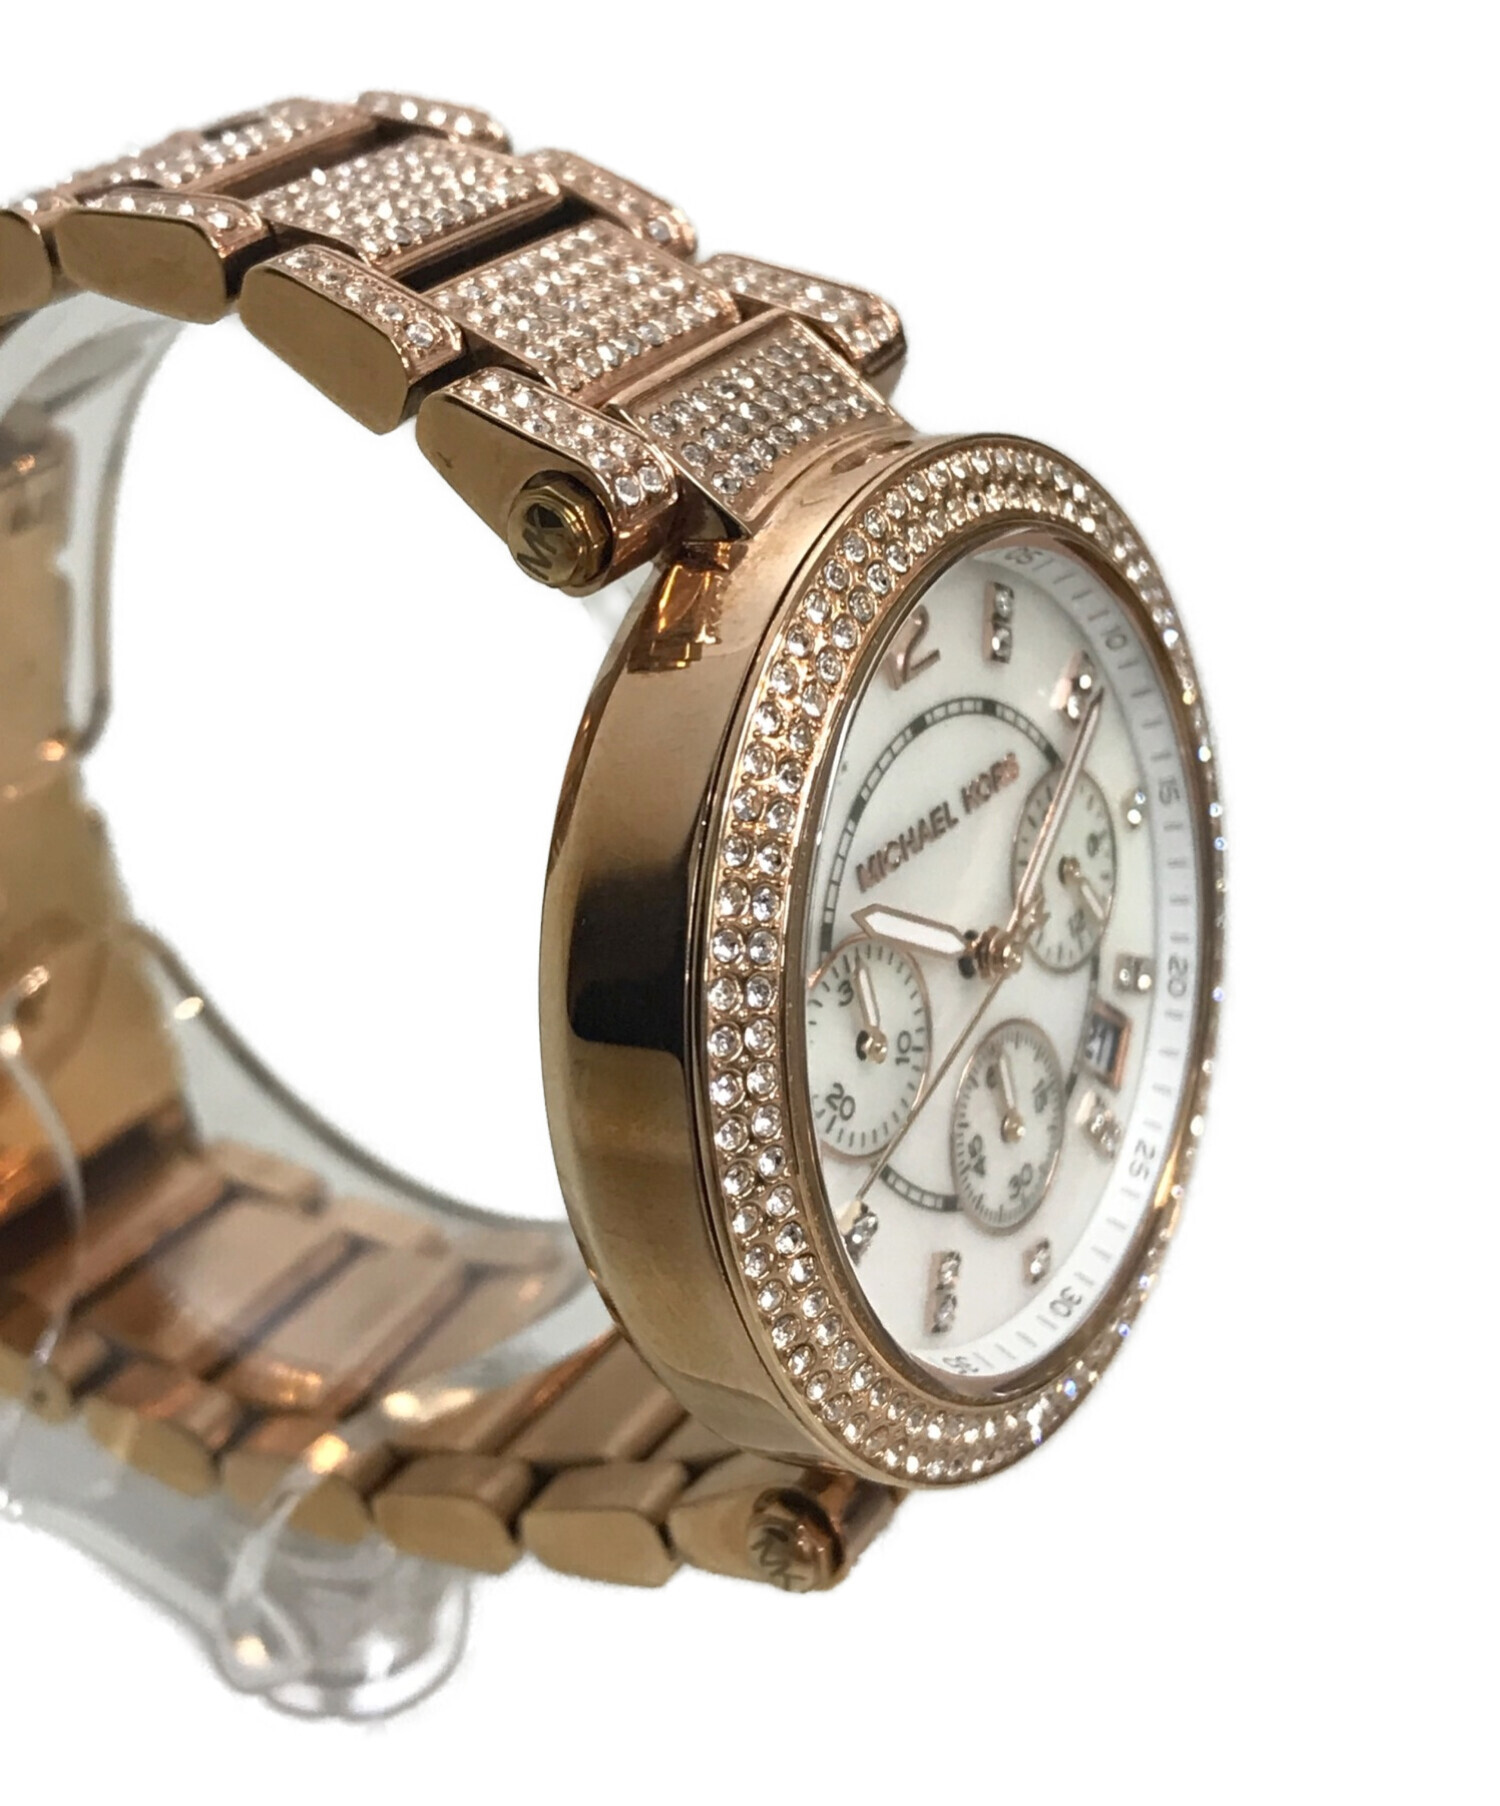 Michael Kors】MK6514 パヴェ ウォッチファッション小物 - 腕時計